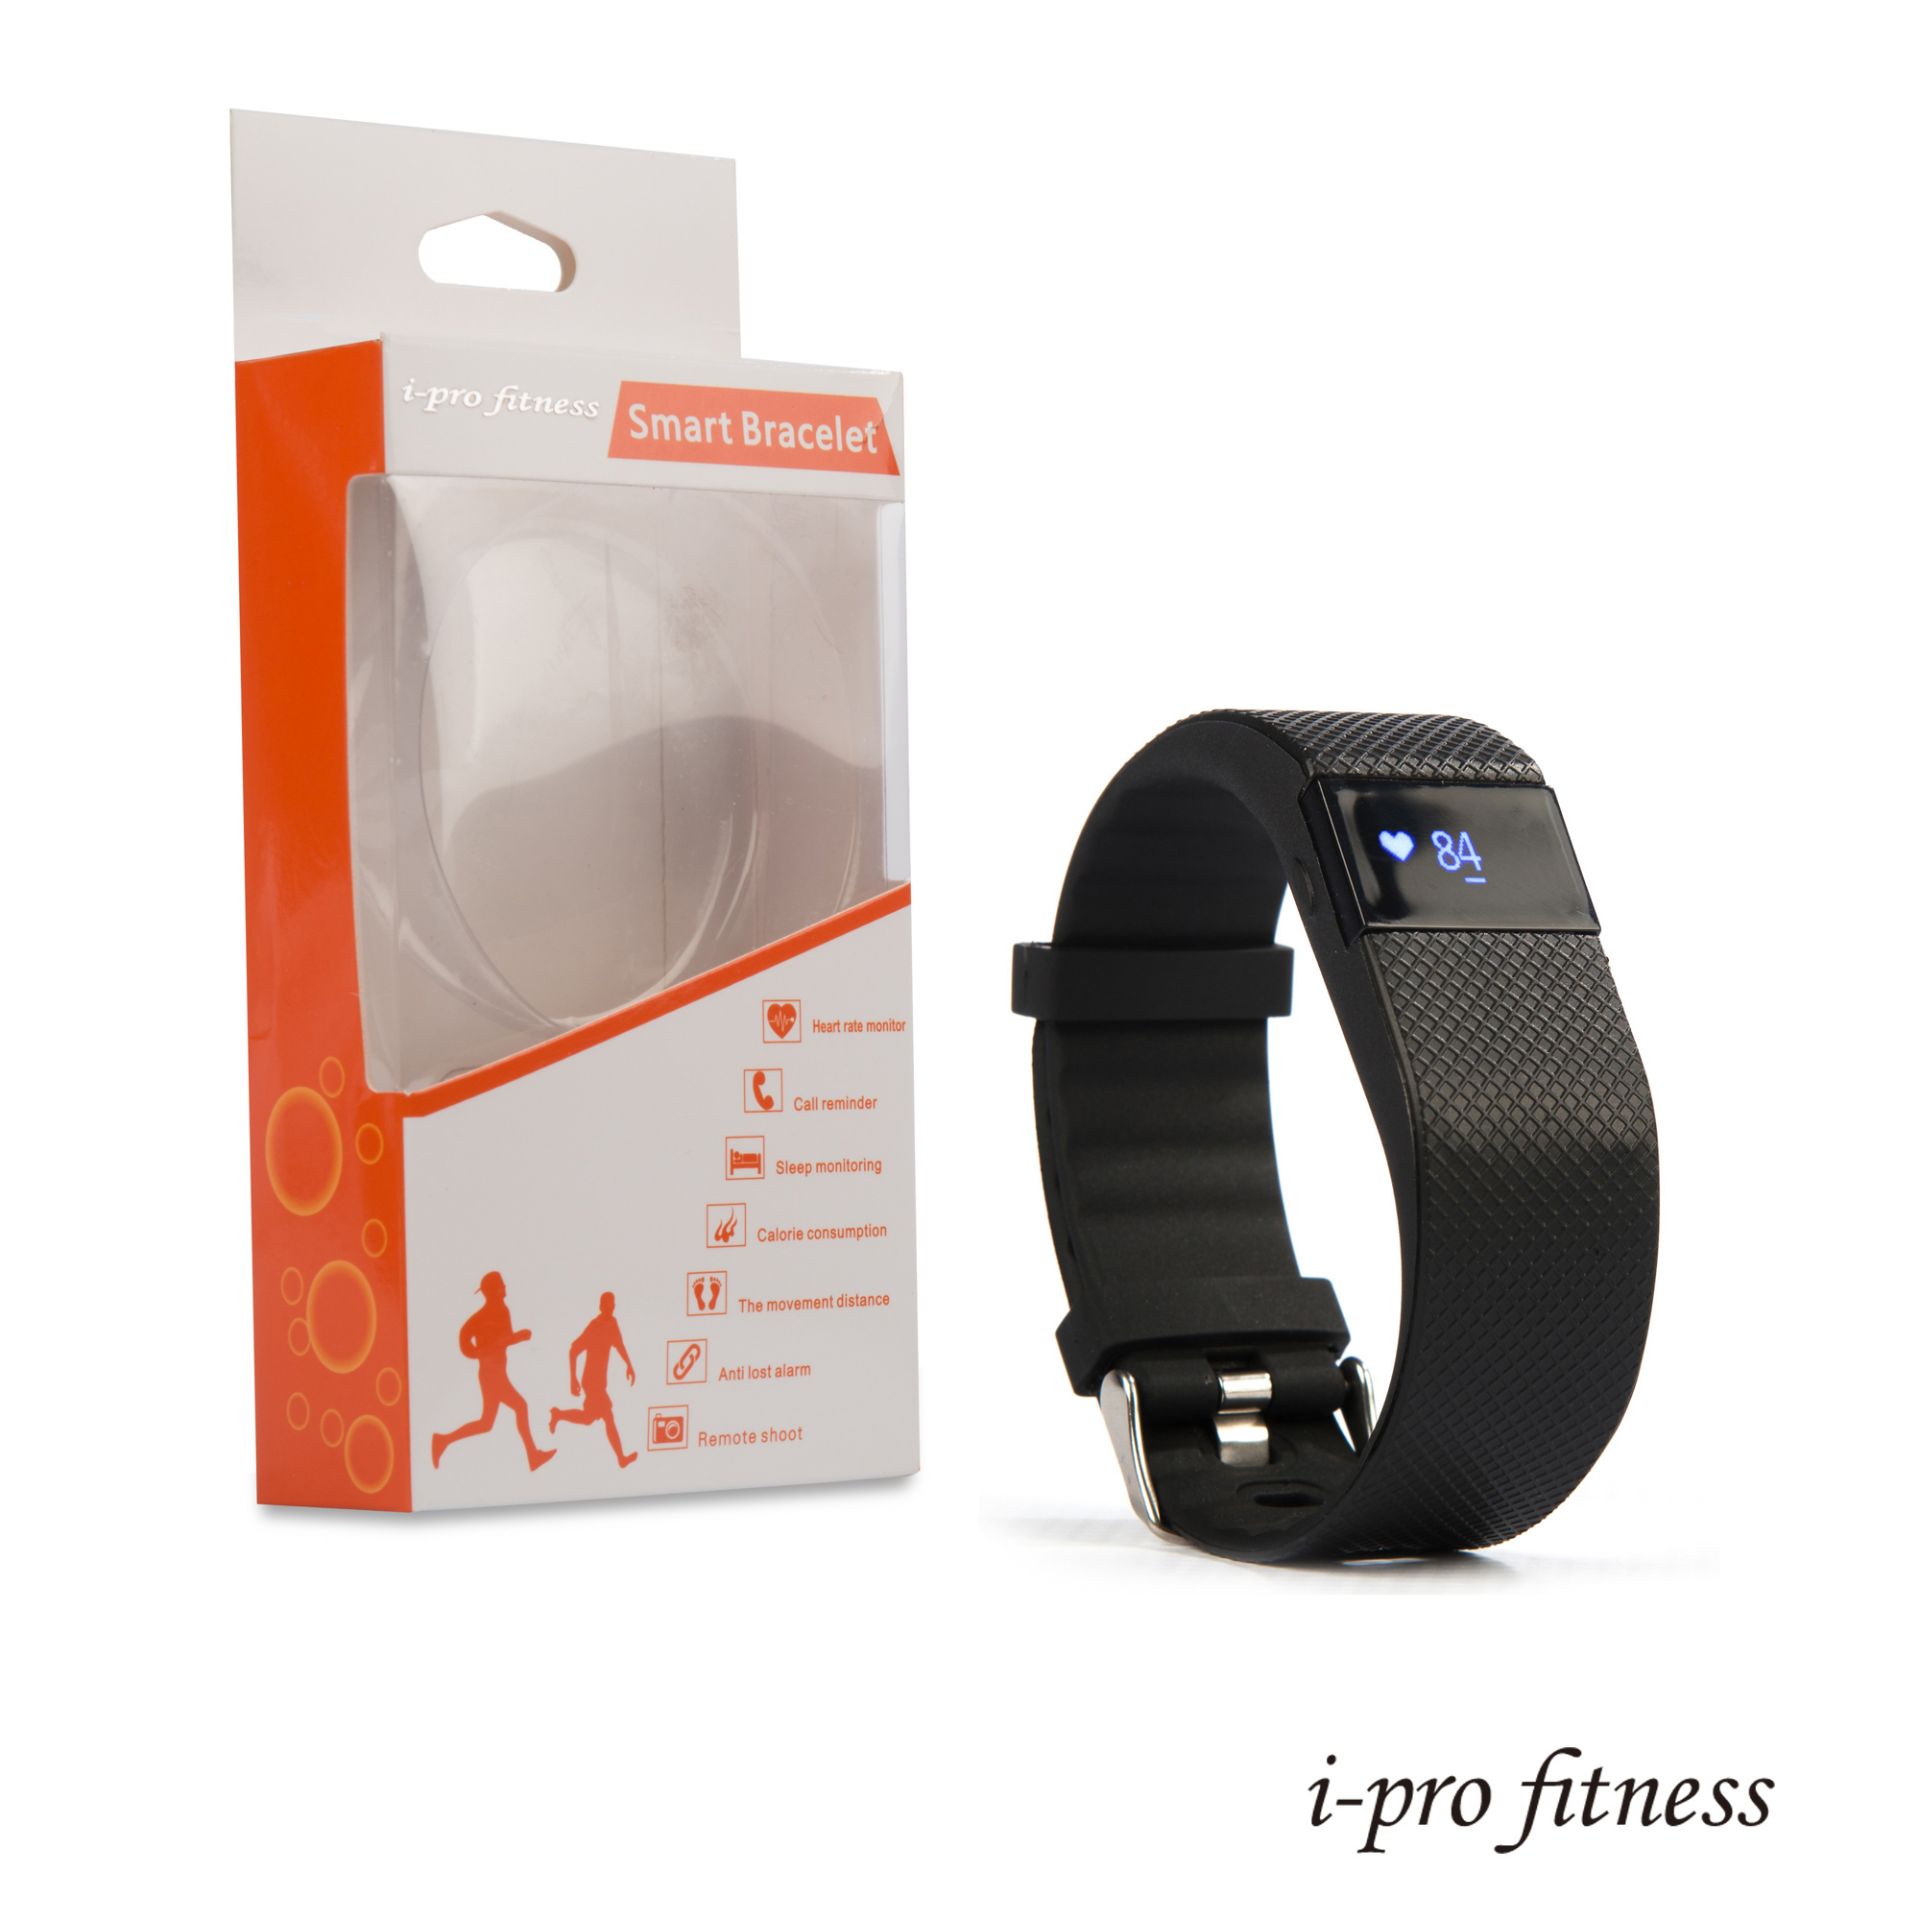 10x Fitness Tracker i-pro fitness, Bluetooth 4.0 Sports Smart Bracelet. - Image 3 of 8